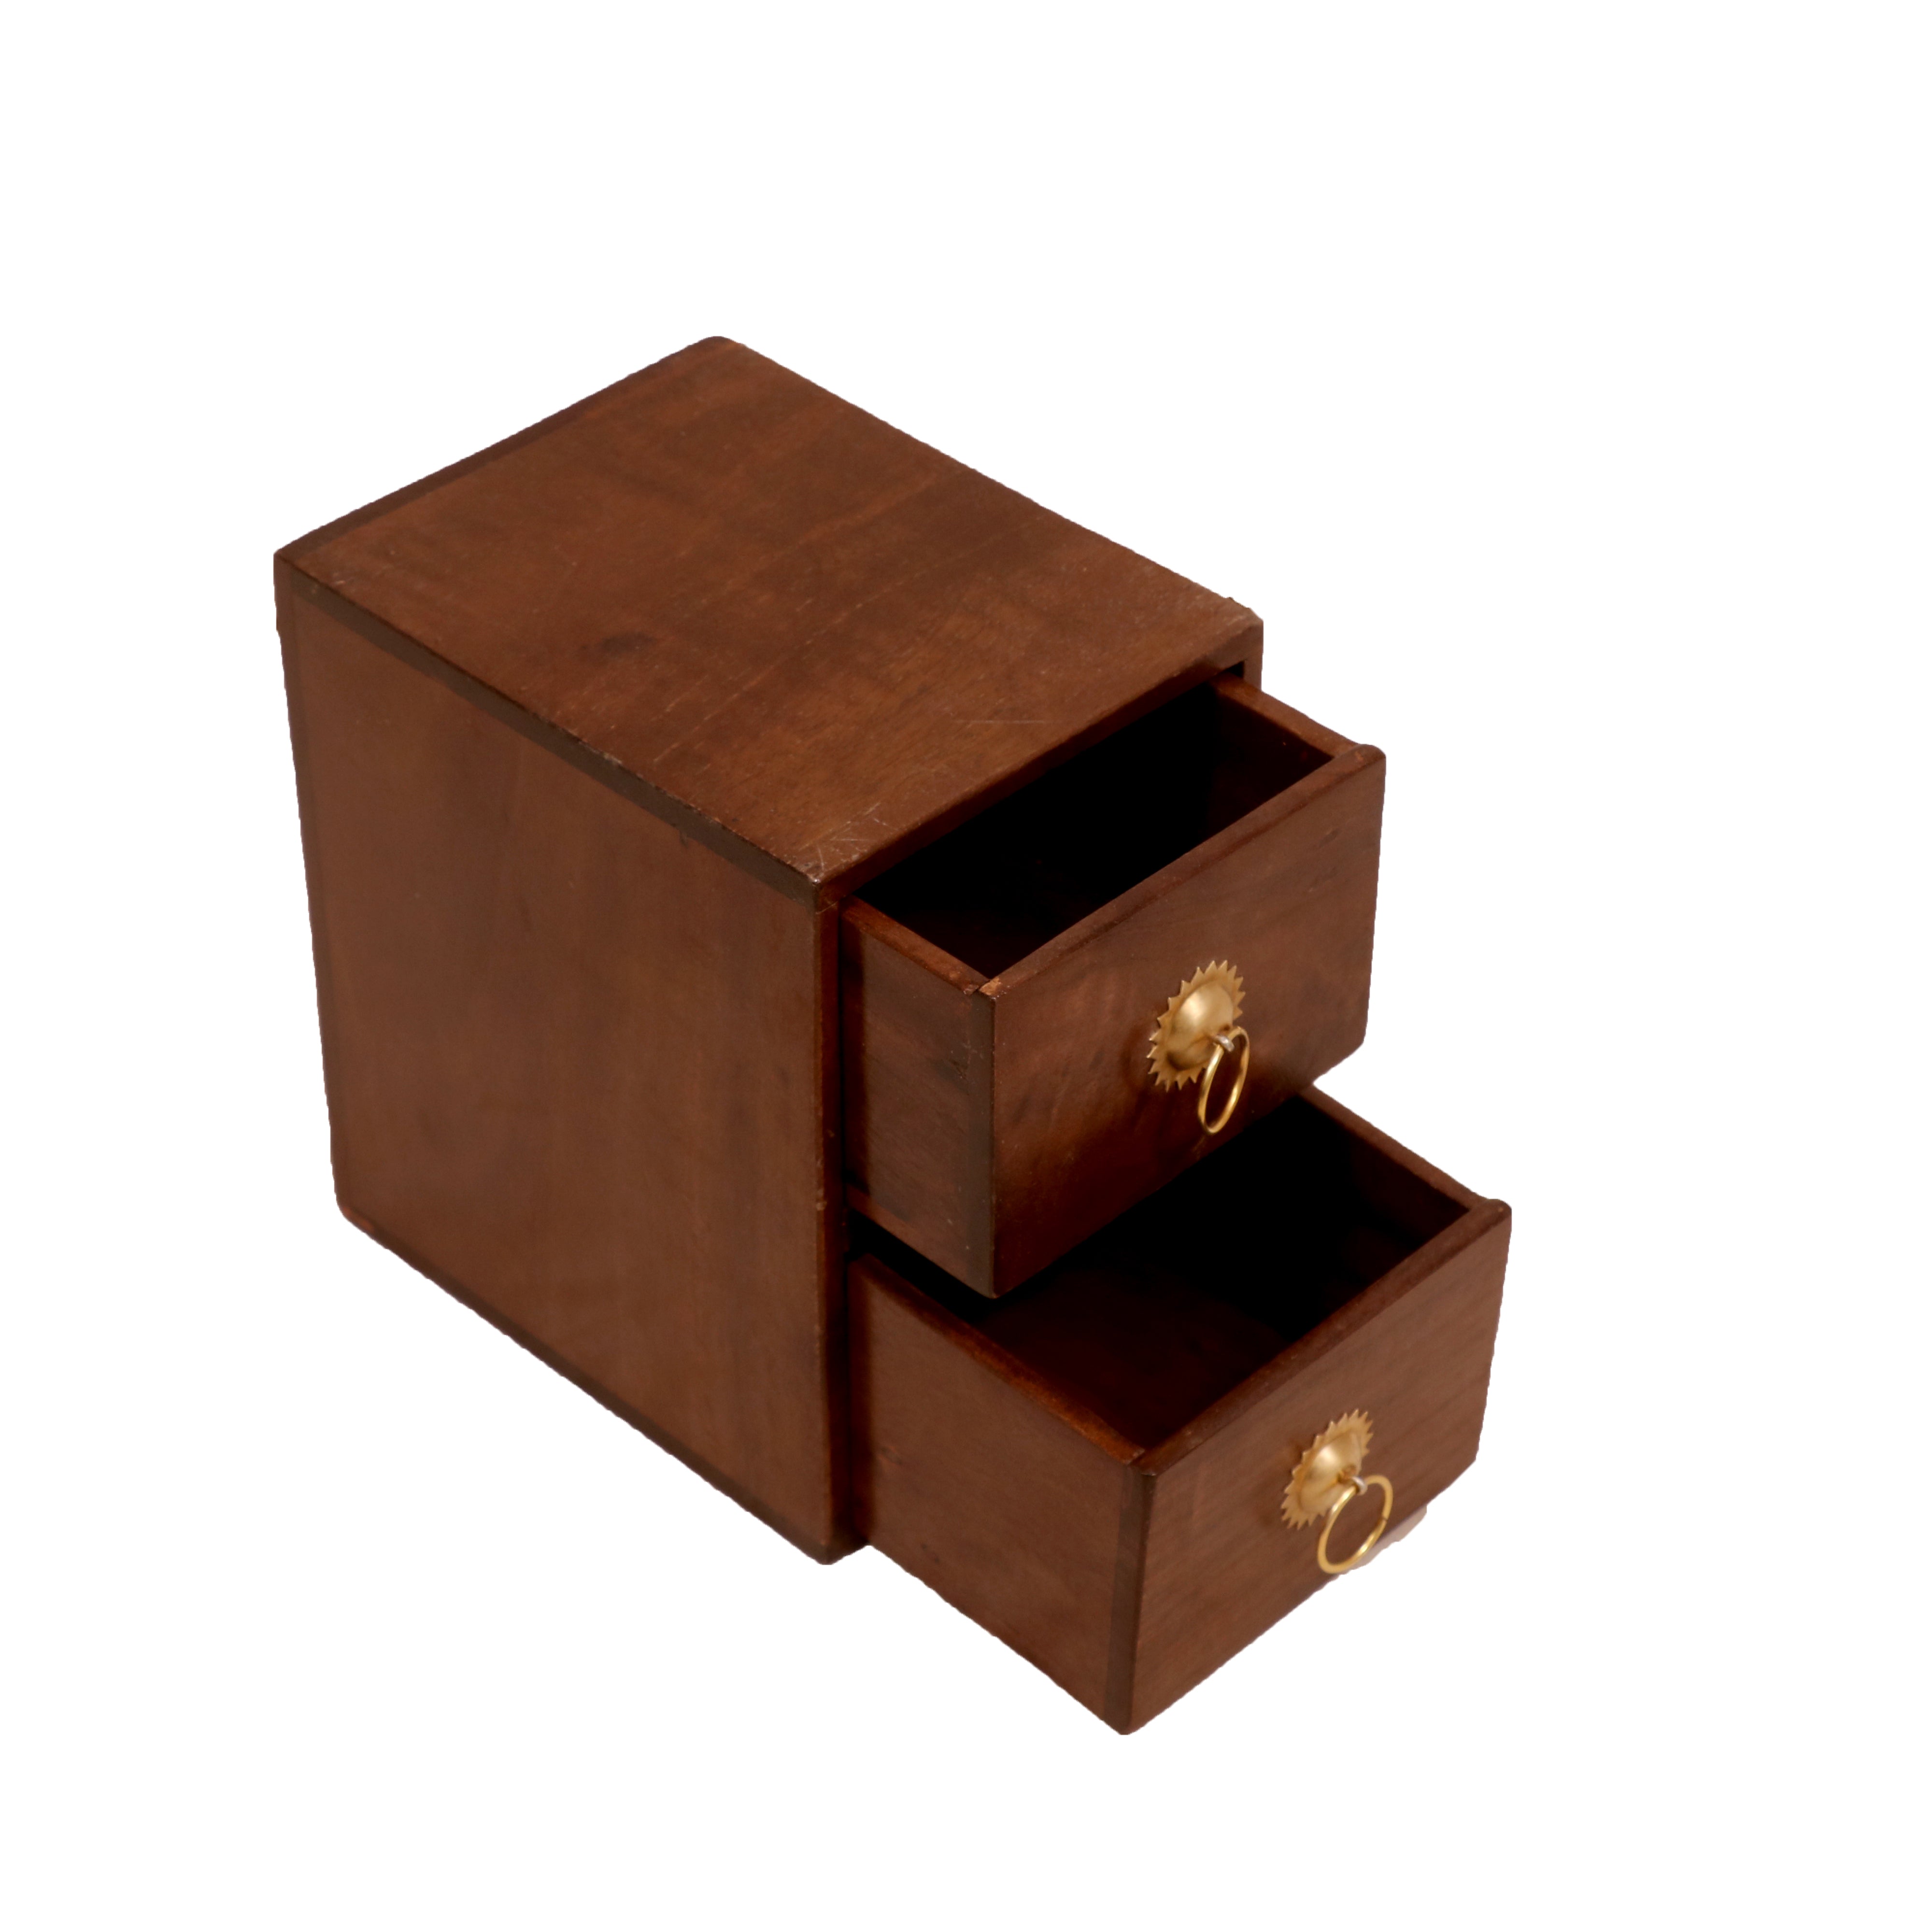 Solid Wood 2-Drawer Set with Holder (7 x 9 x 10 Inch) Desk Organizer